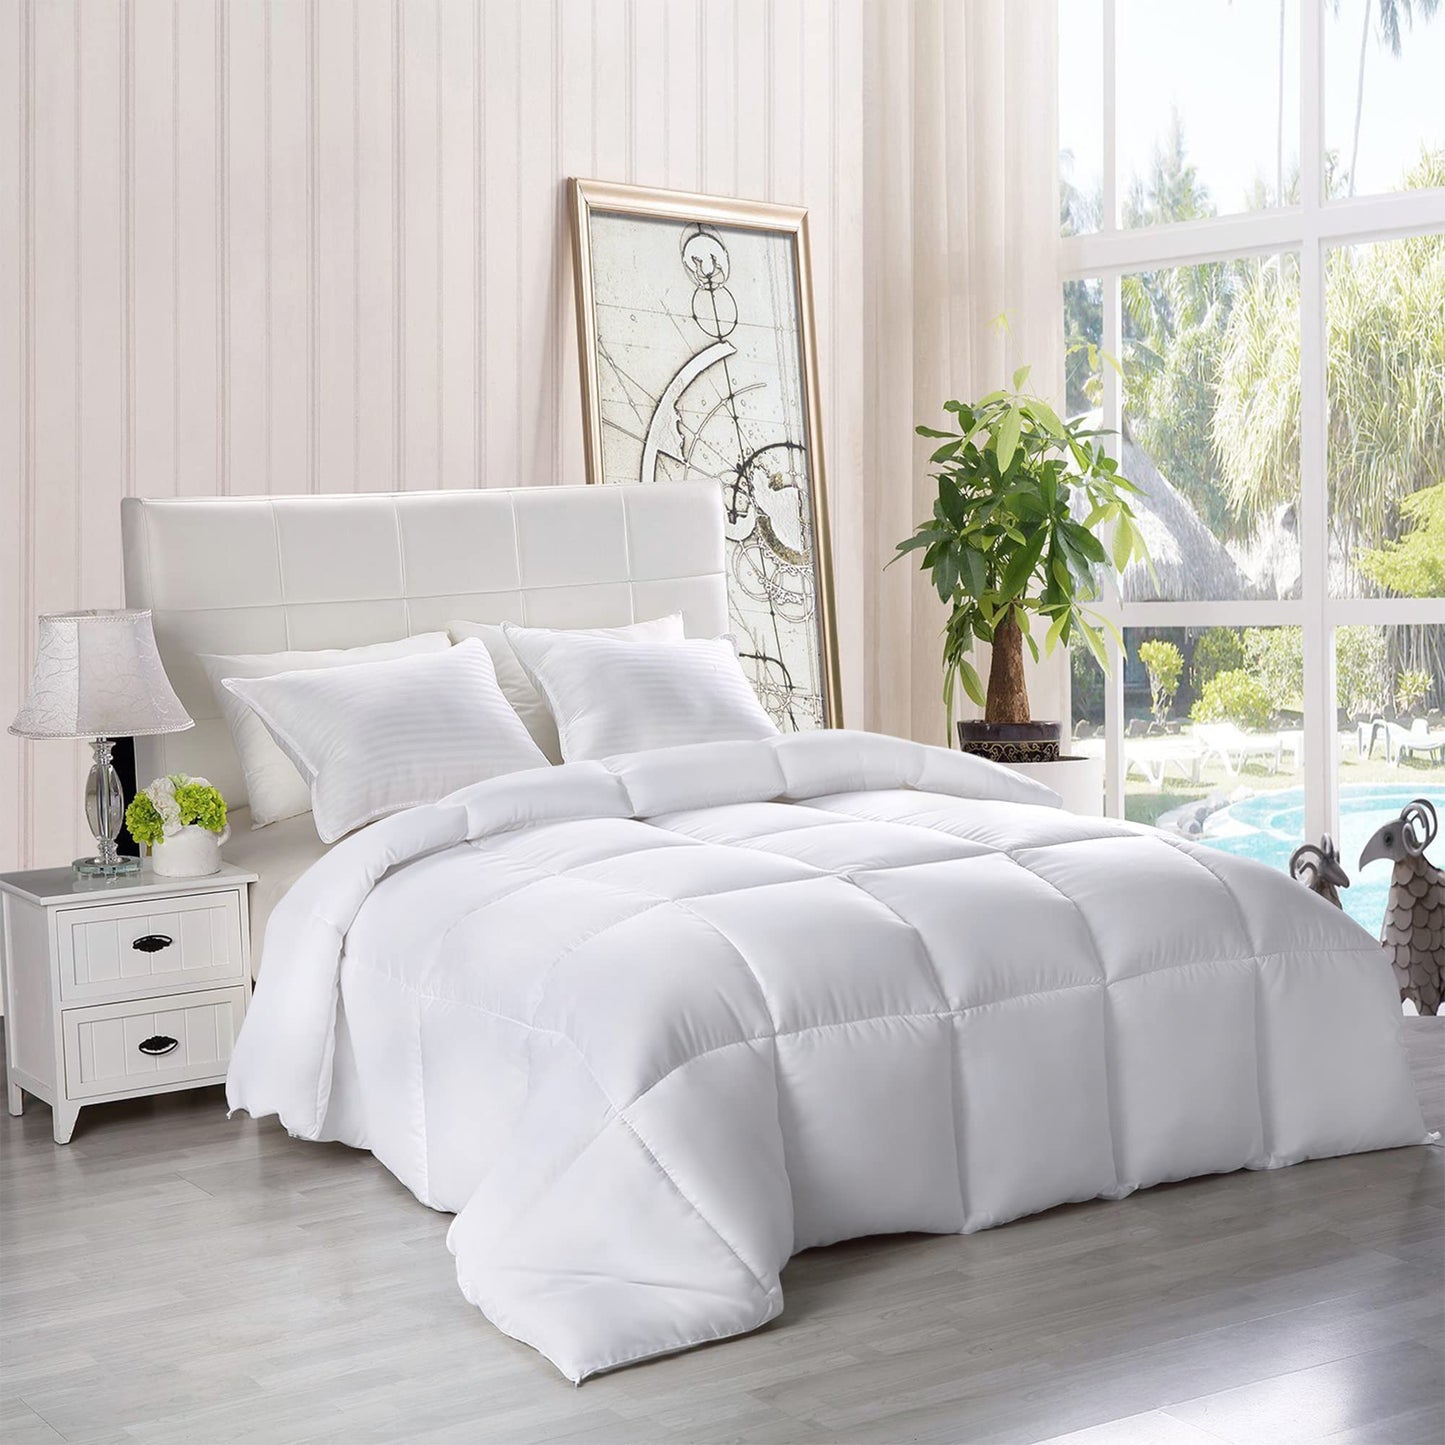 Utopia Bedding Down Alternative Twin XL Comforter - All Season Comforter, Plush Siliconized Fiberfill Duvet Insert, Box Stitched (Twin XL, White)